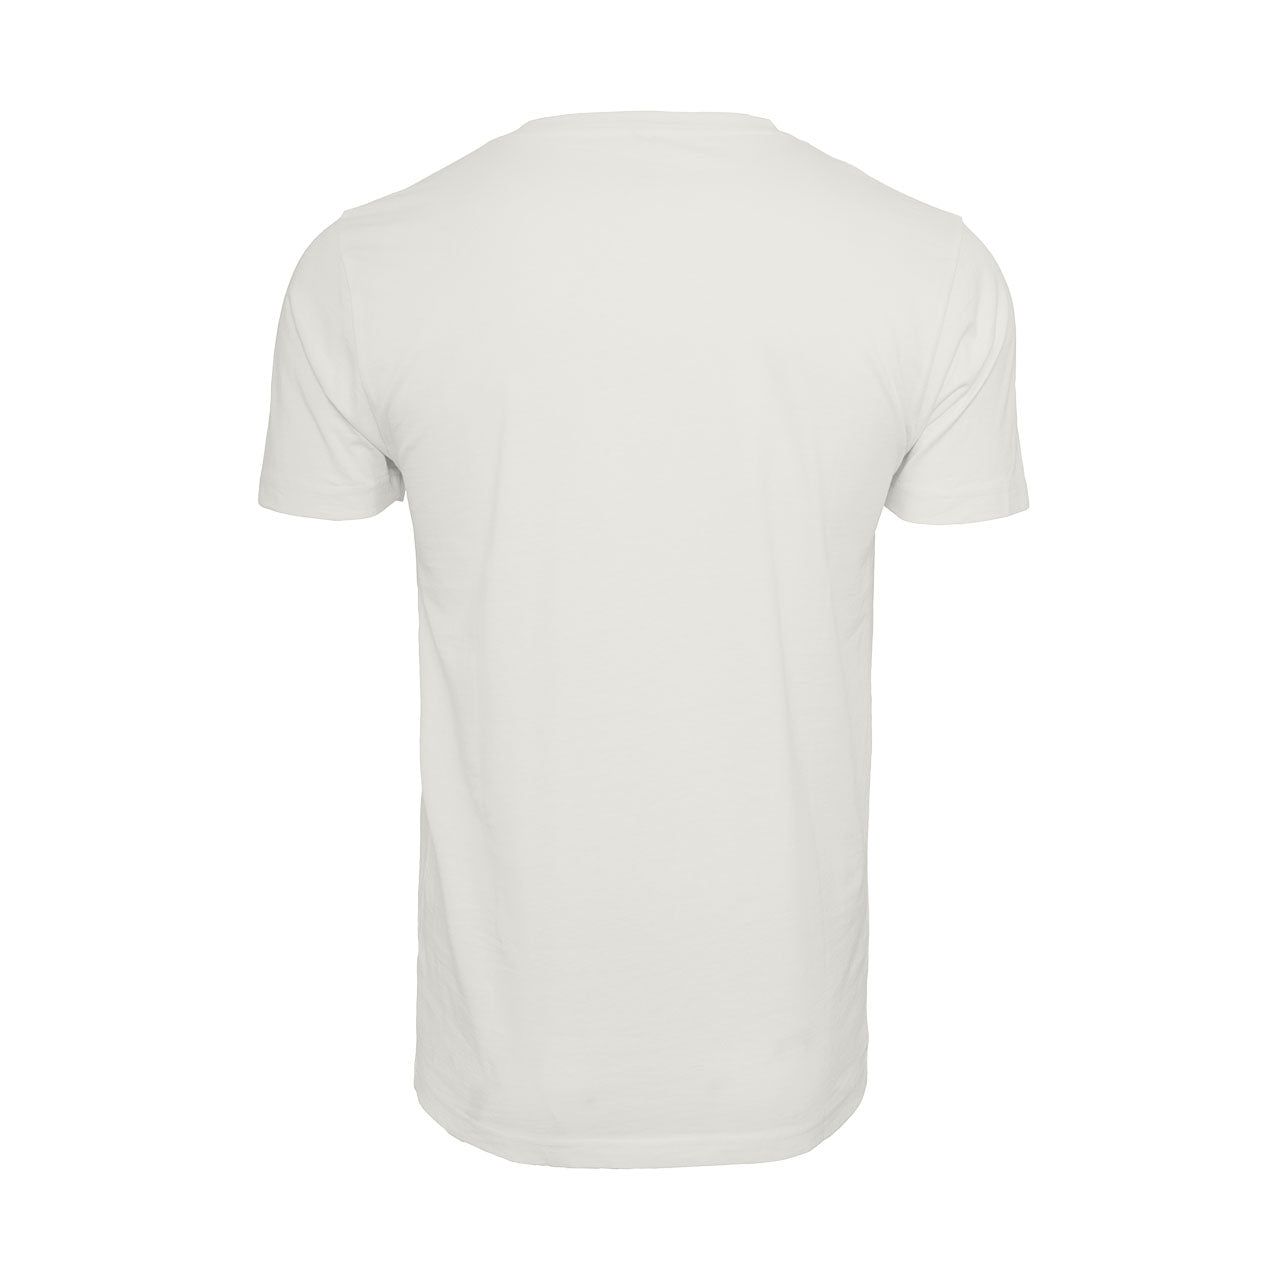 Neelix - Colored Ghost T-Shirt